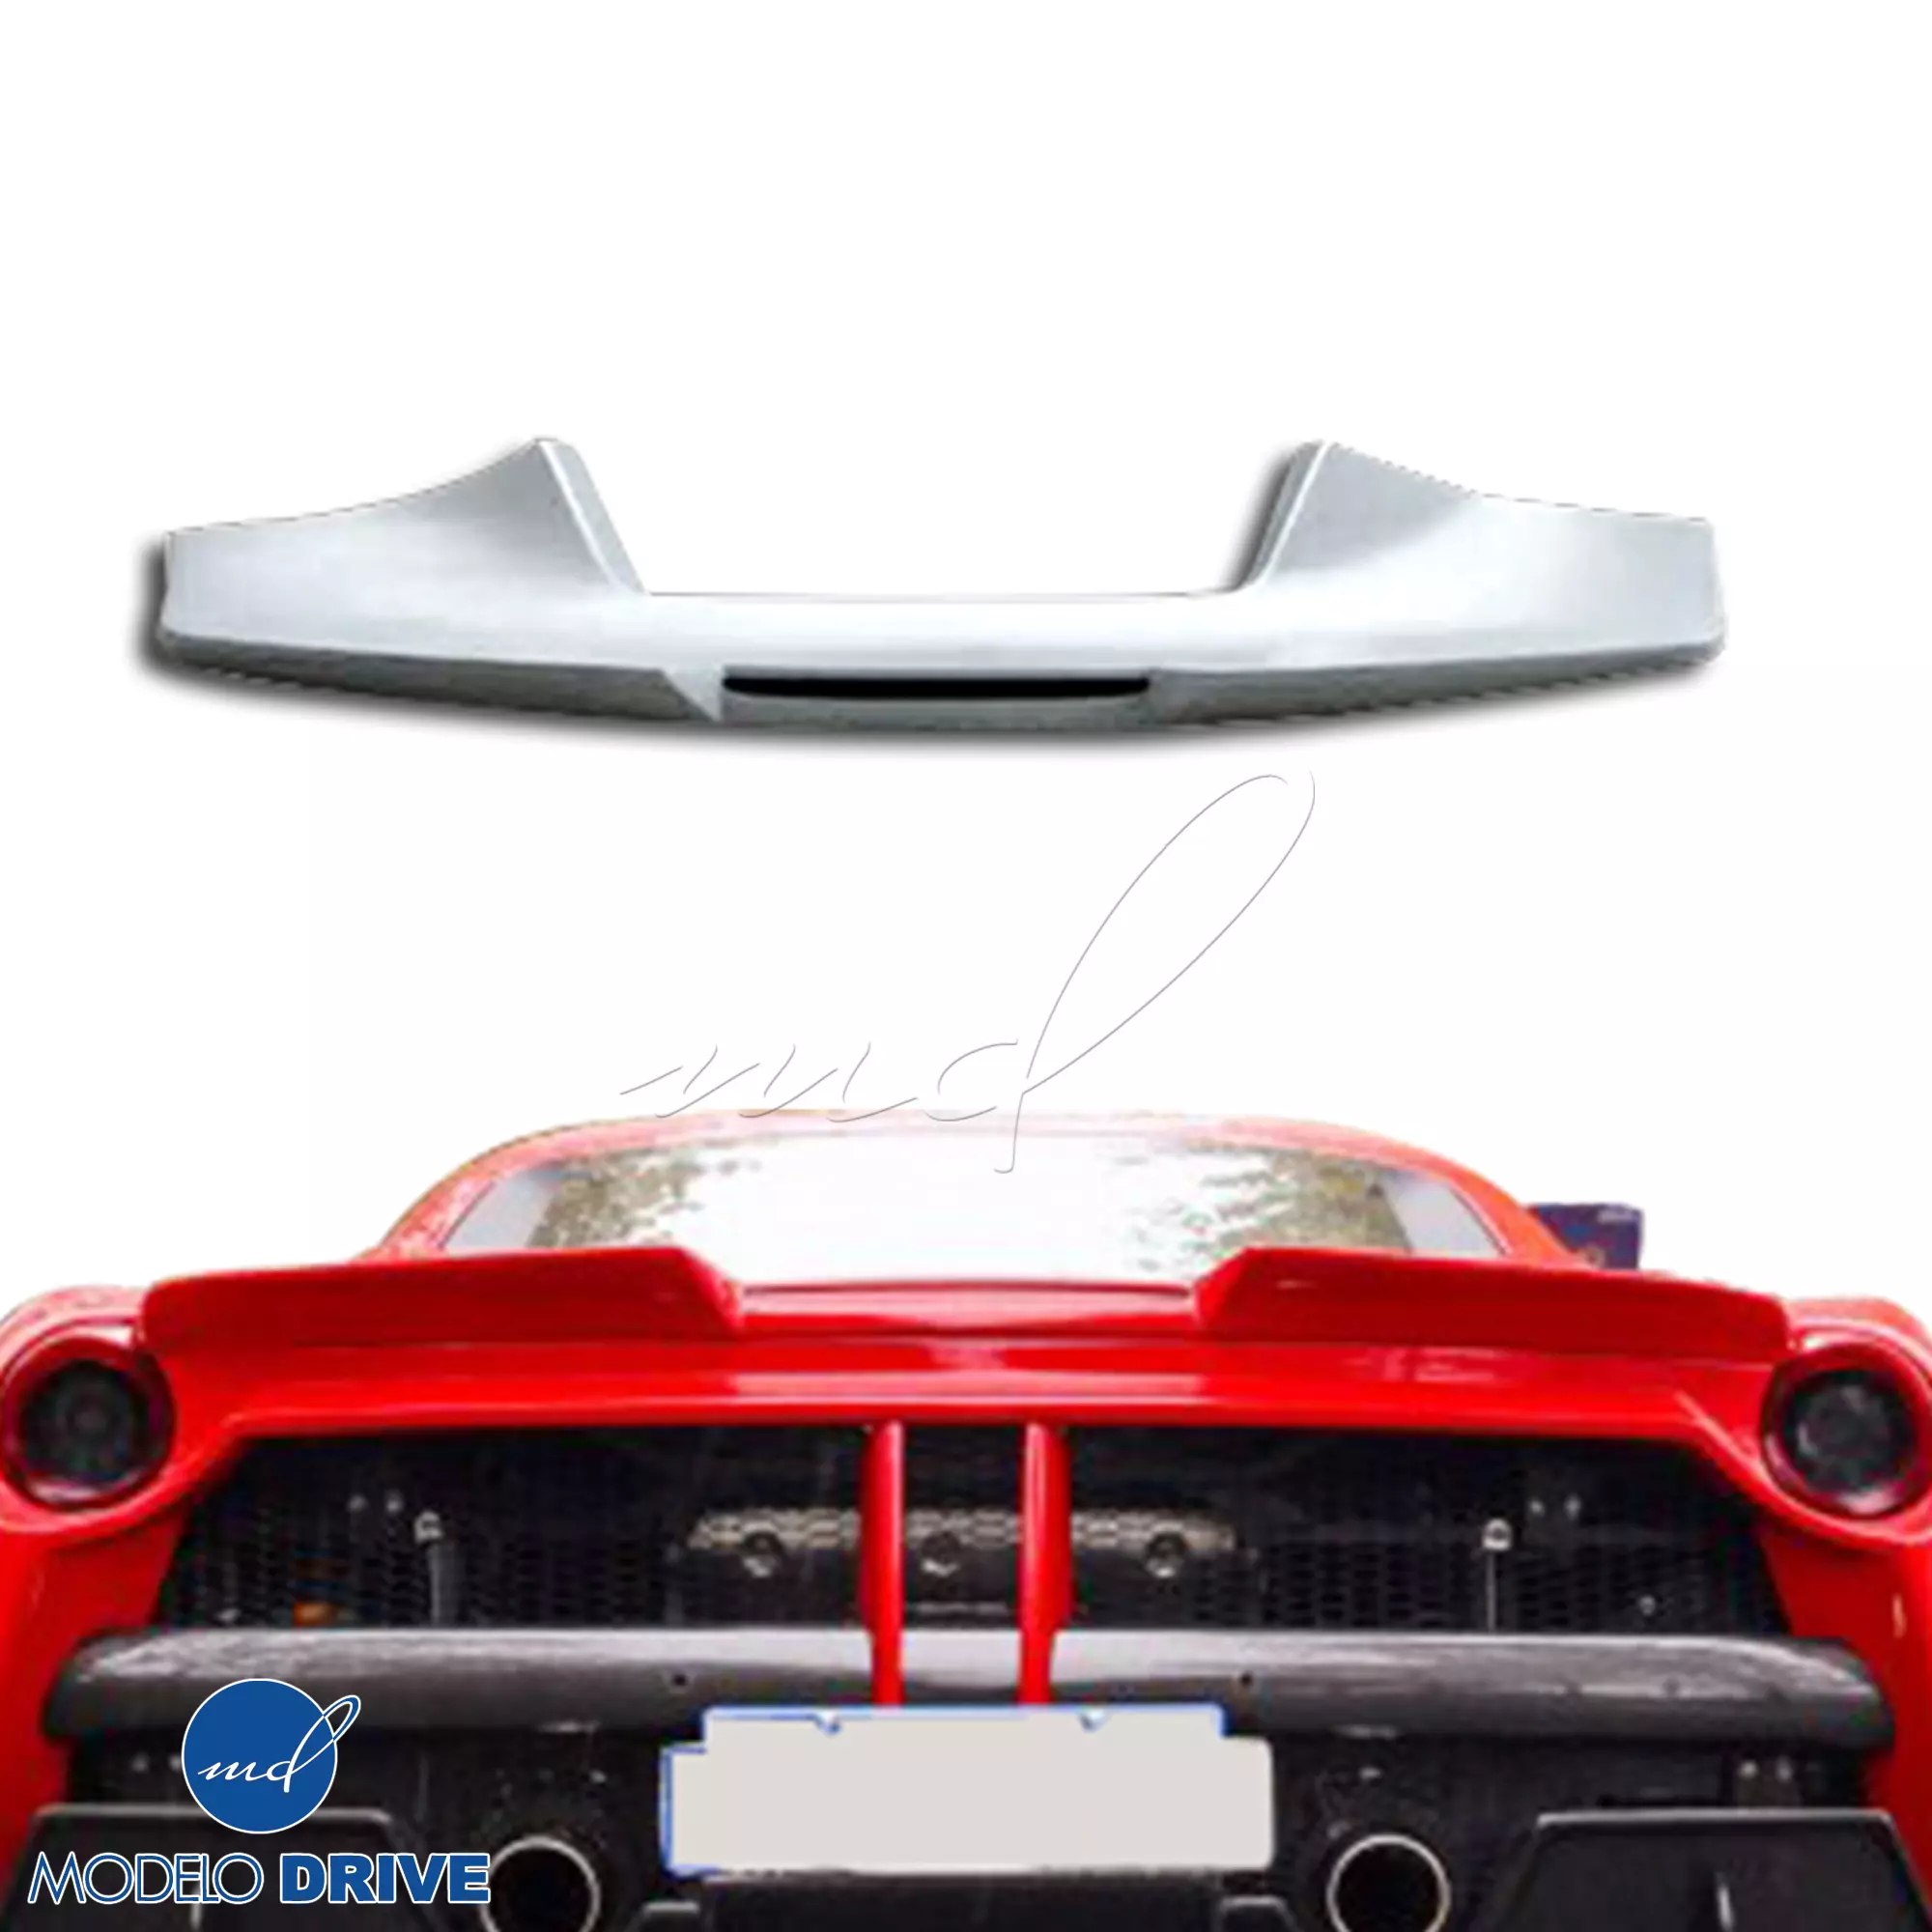 ModeloDrive FRP MDES Spoiler Wing > Ferrari 488 GTB F142M 2016-2019 - Image 4